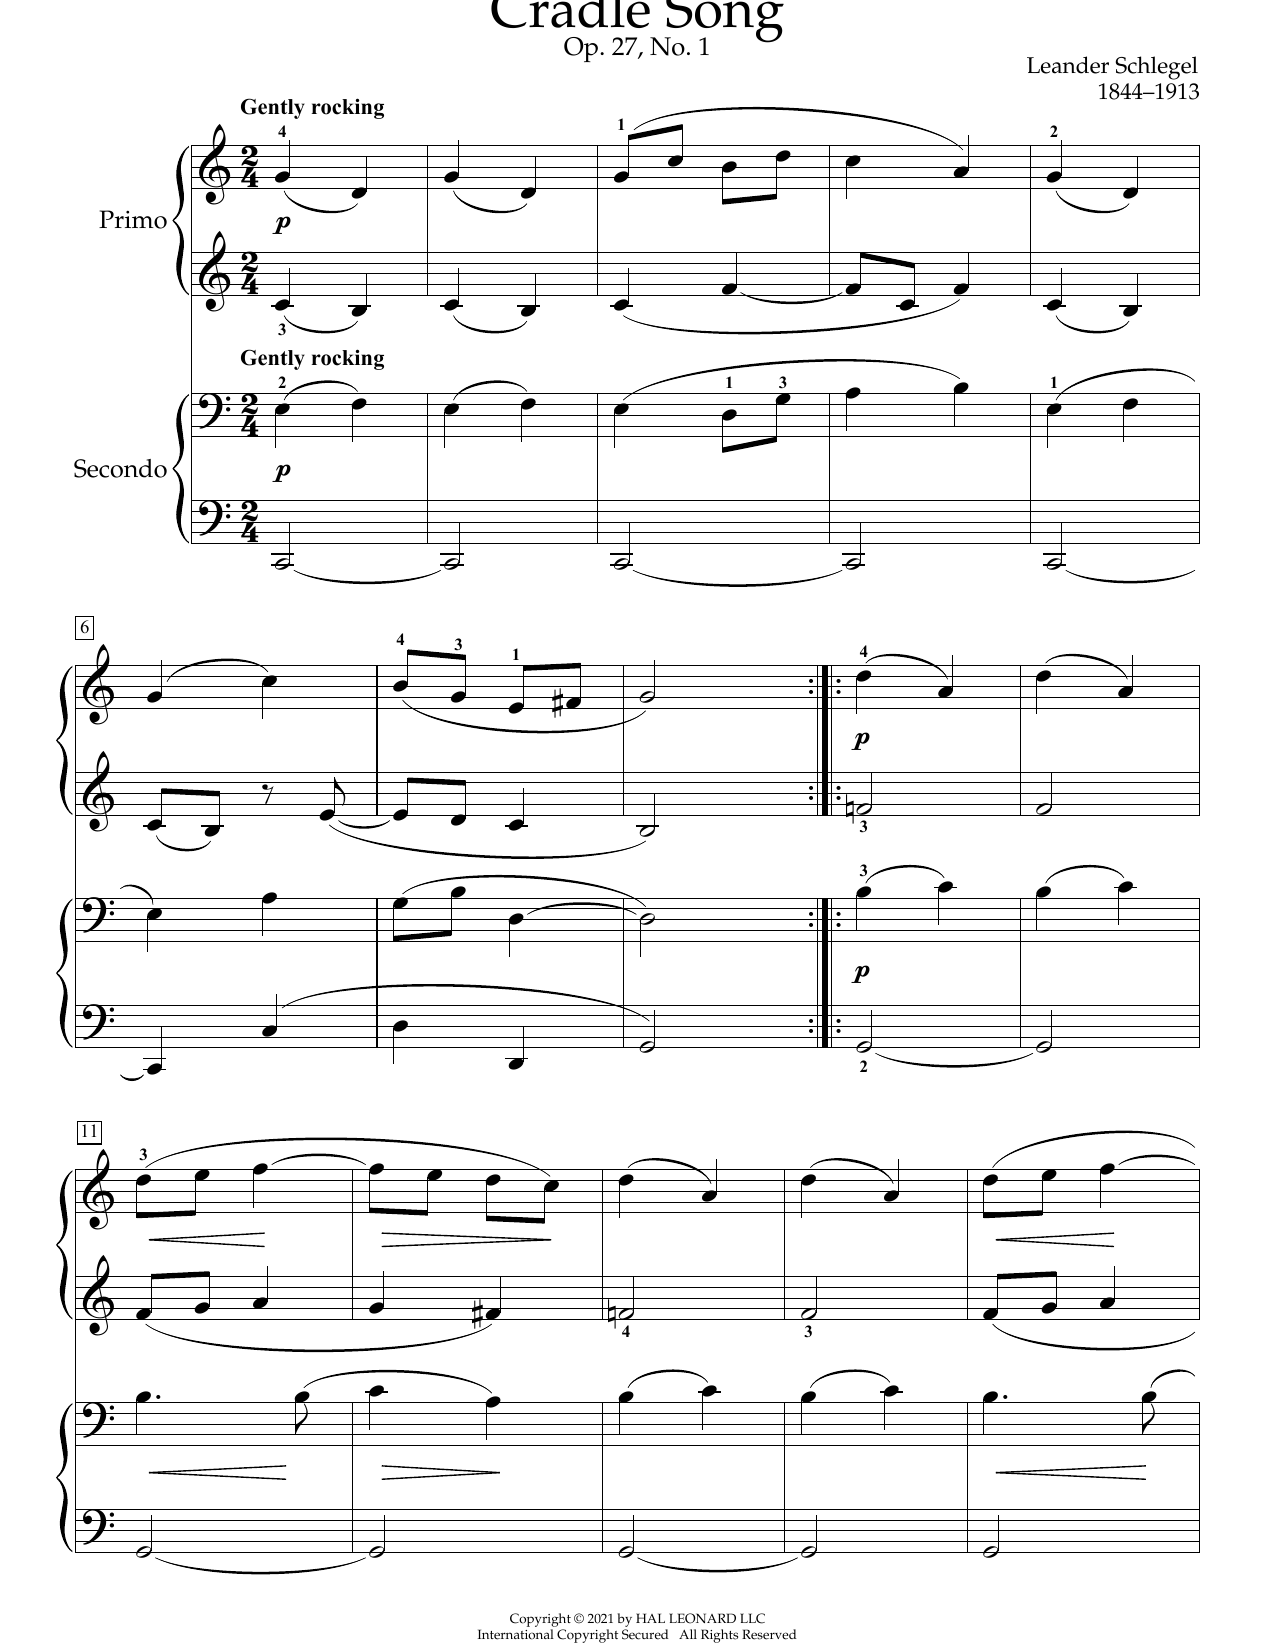 Download Leander Schlegel Cradle Song, Op. 27, No. 1 Sheet Music